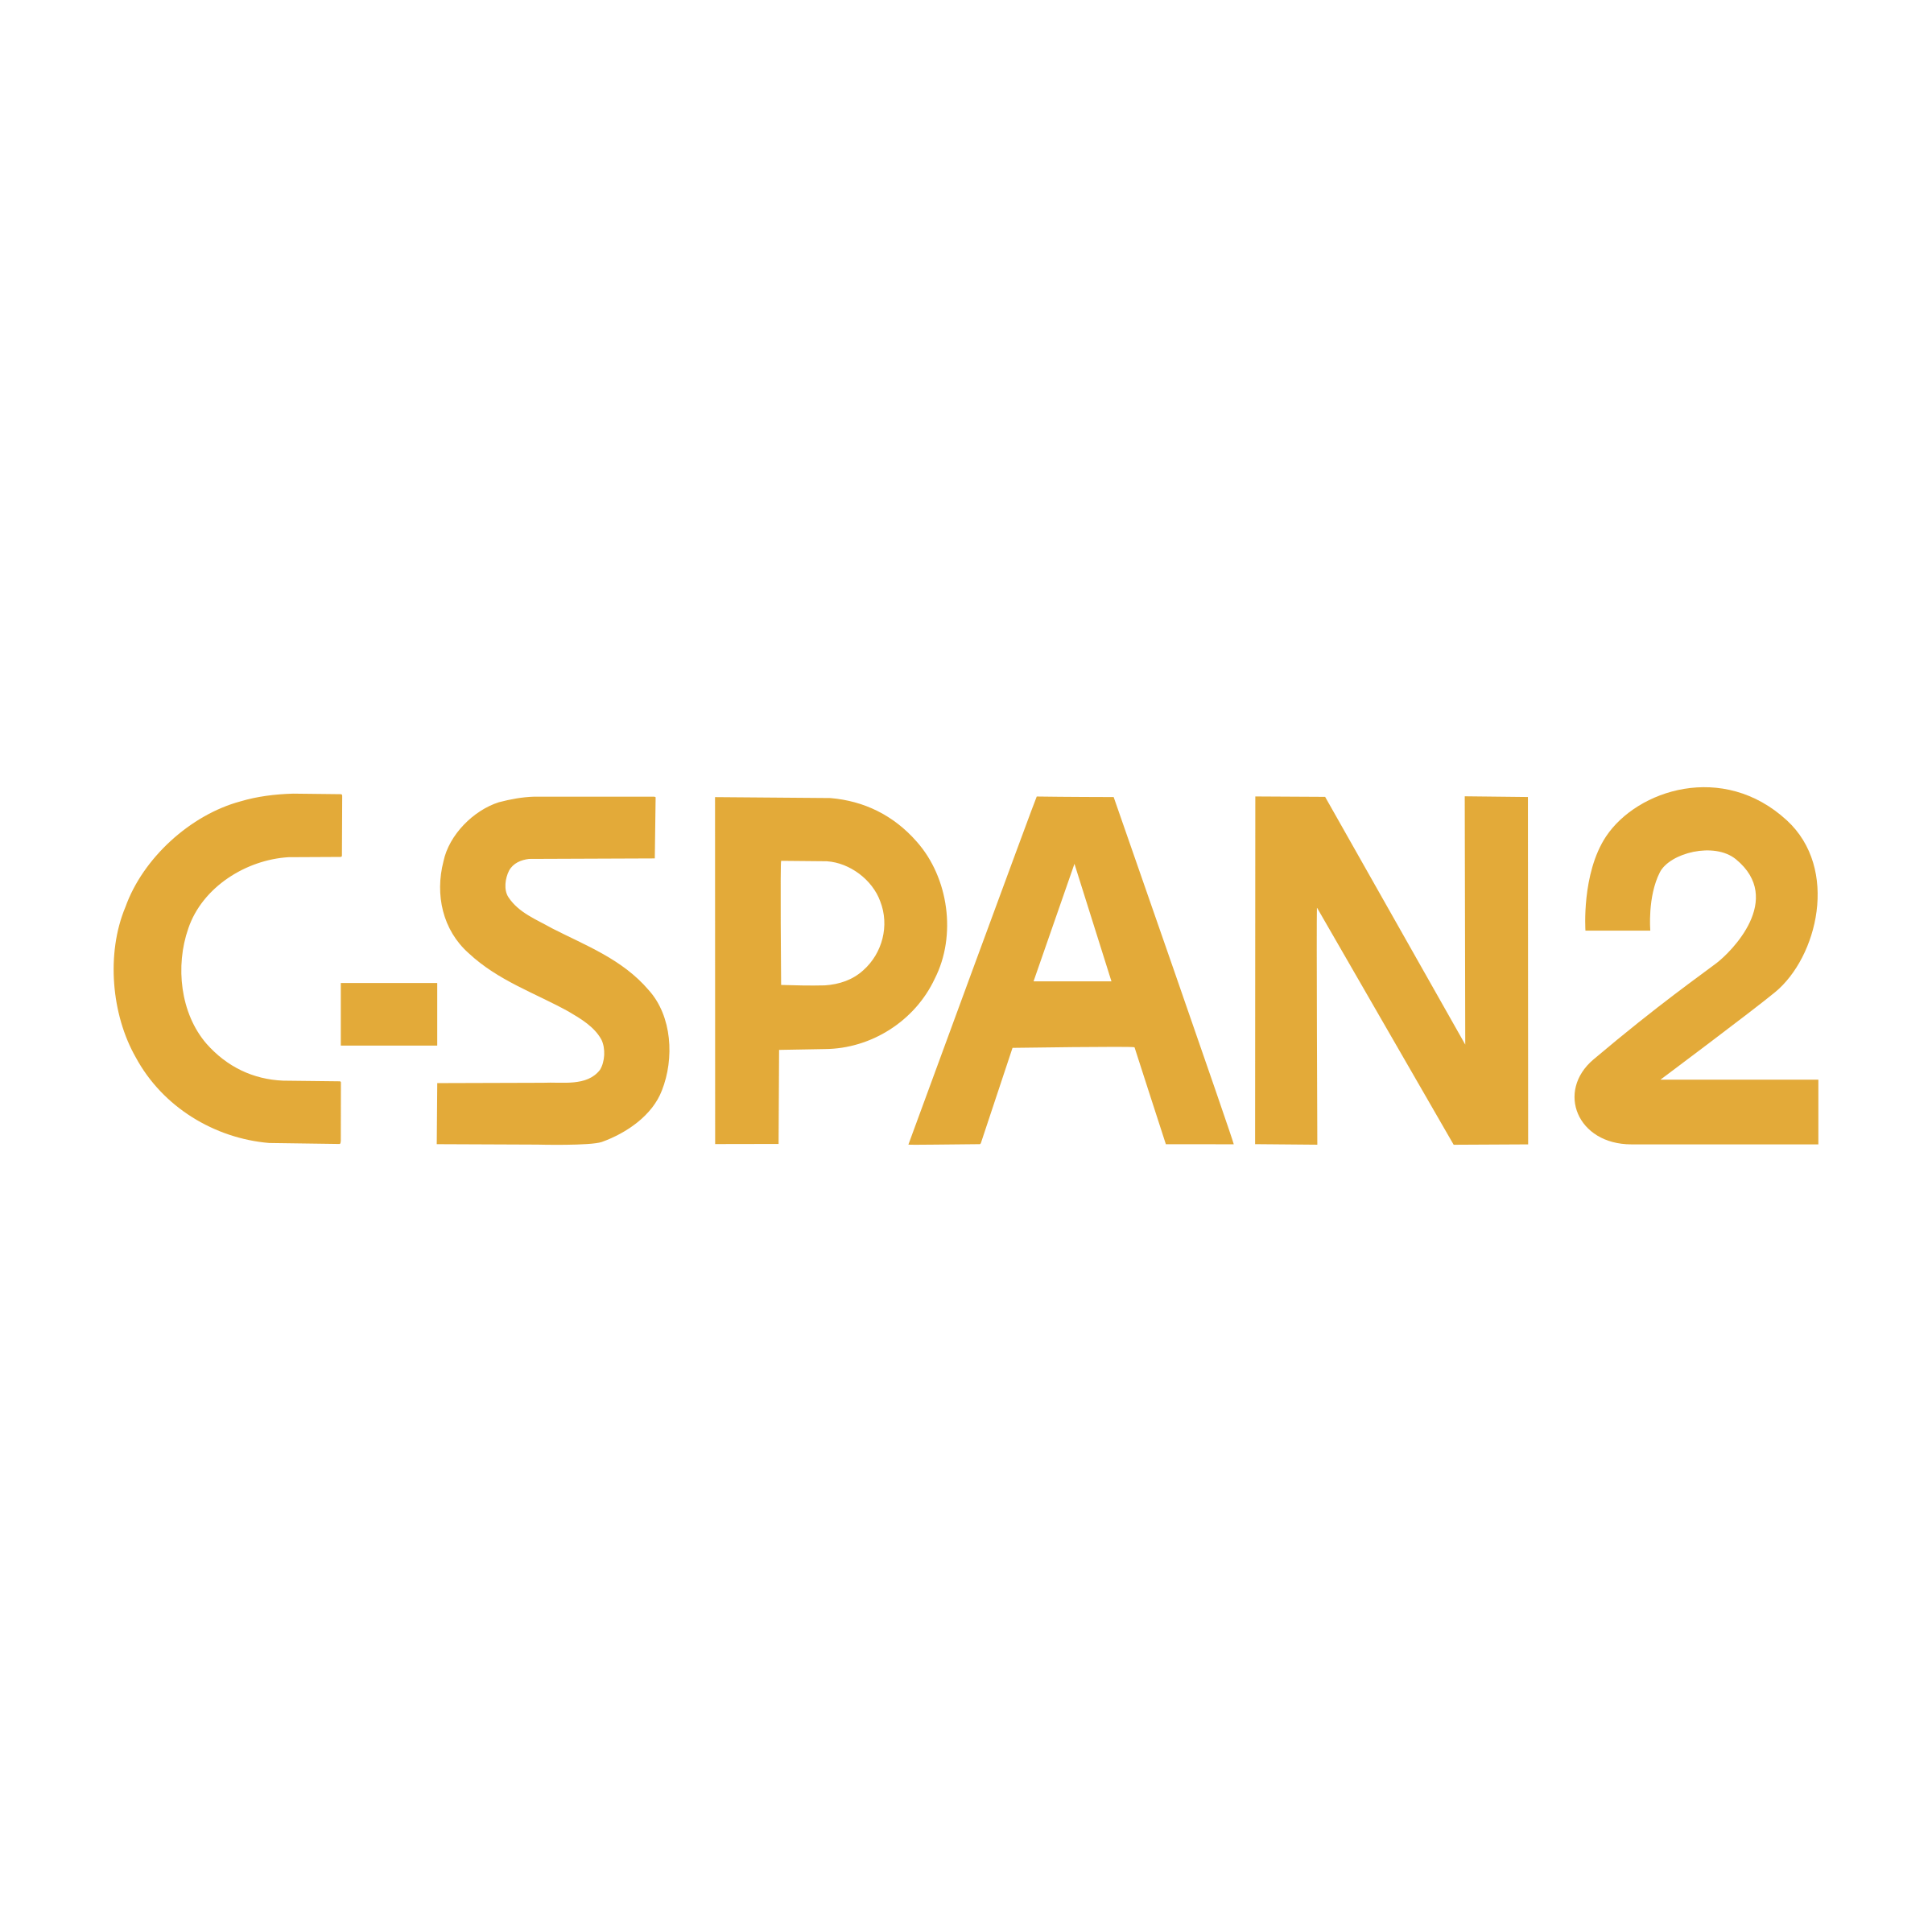 C-SPAN Logo - C span 2 Logo PNG Transparent & SVG Vector - Freebie Supply